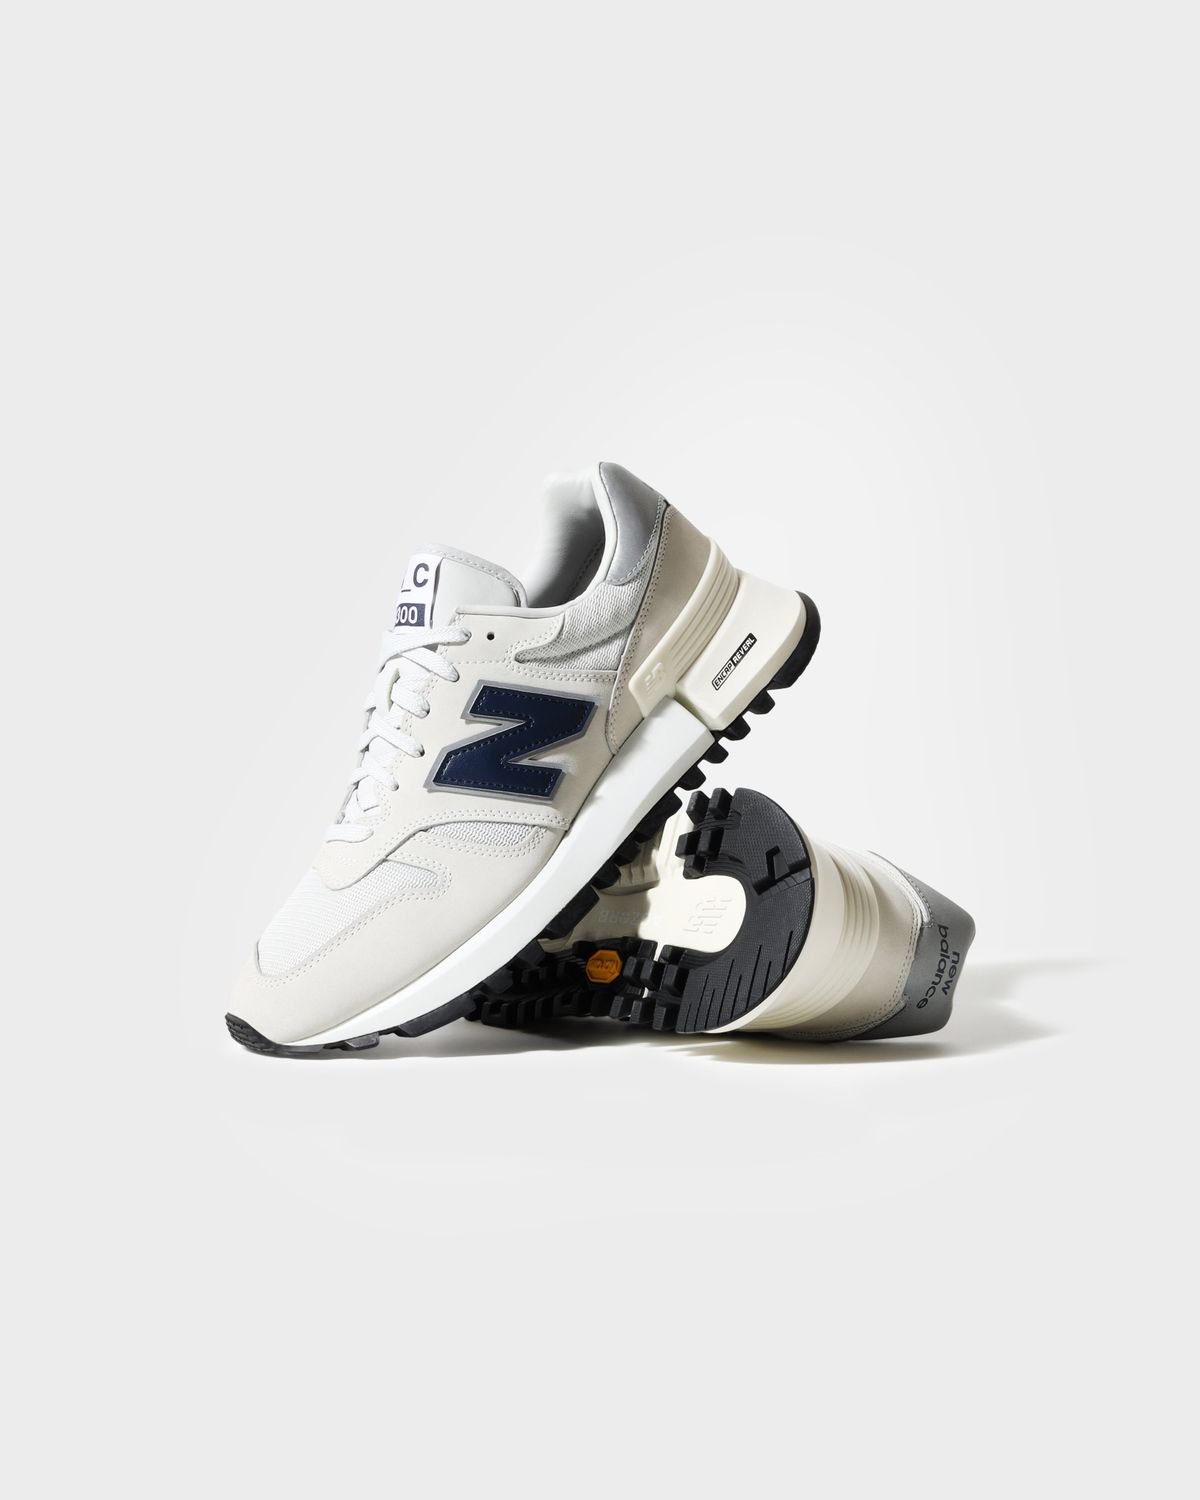 New Balance – Tokyo Design Studio R-C1300 Grey - Sneakers - White - Image 4